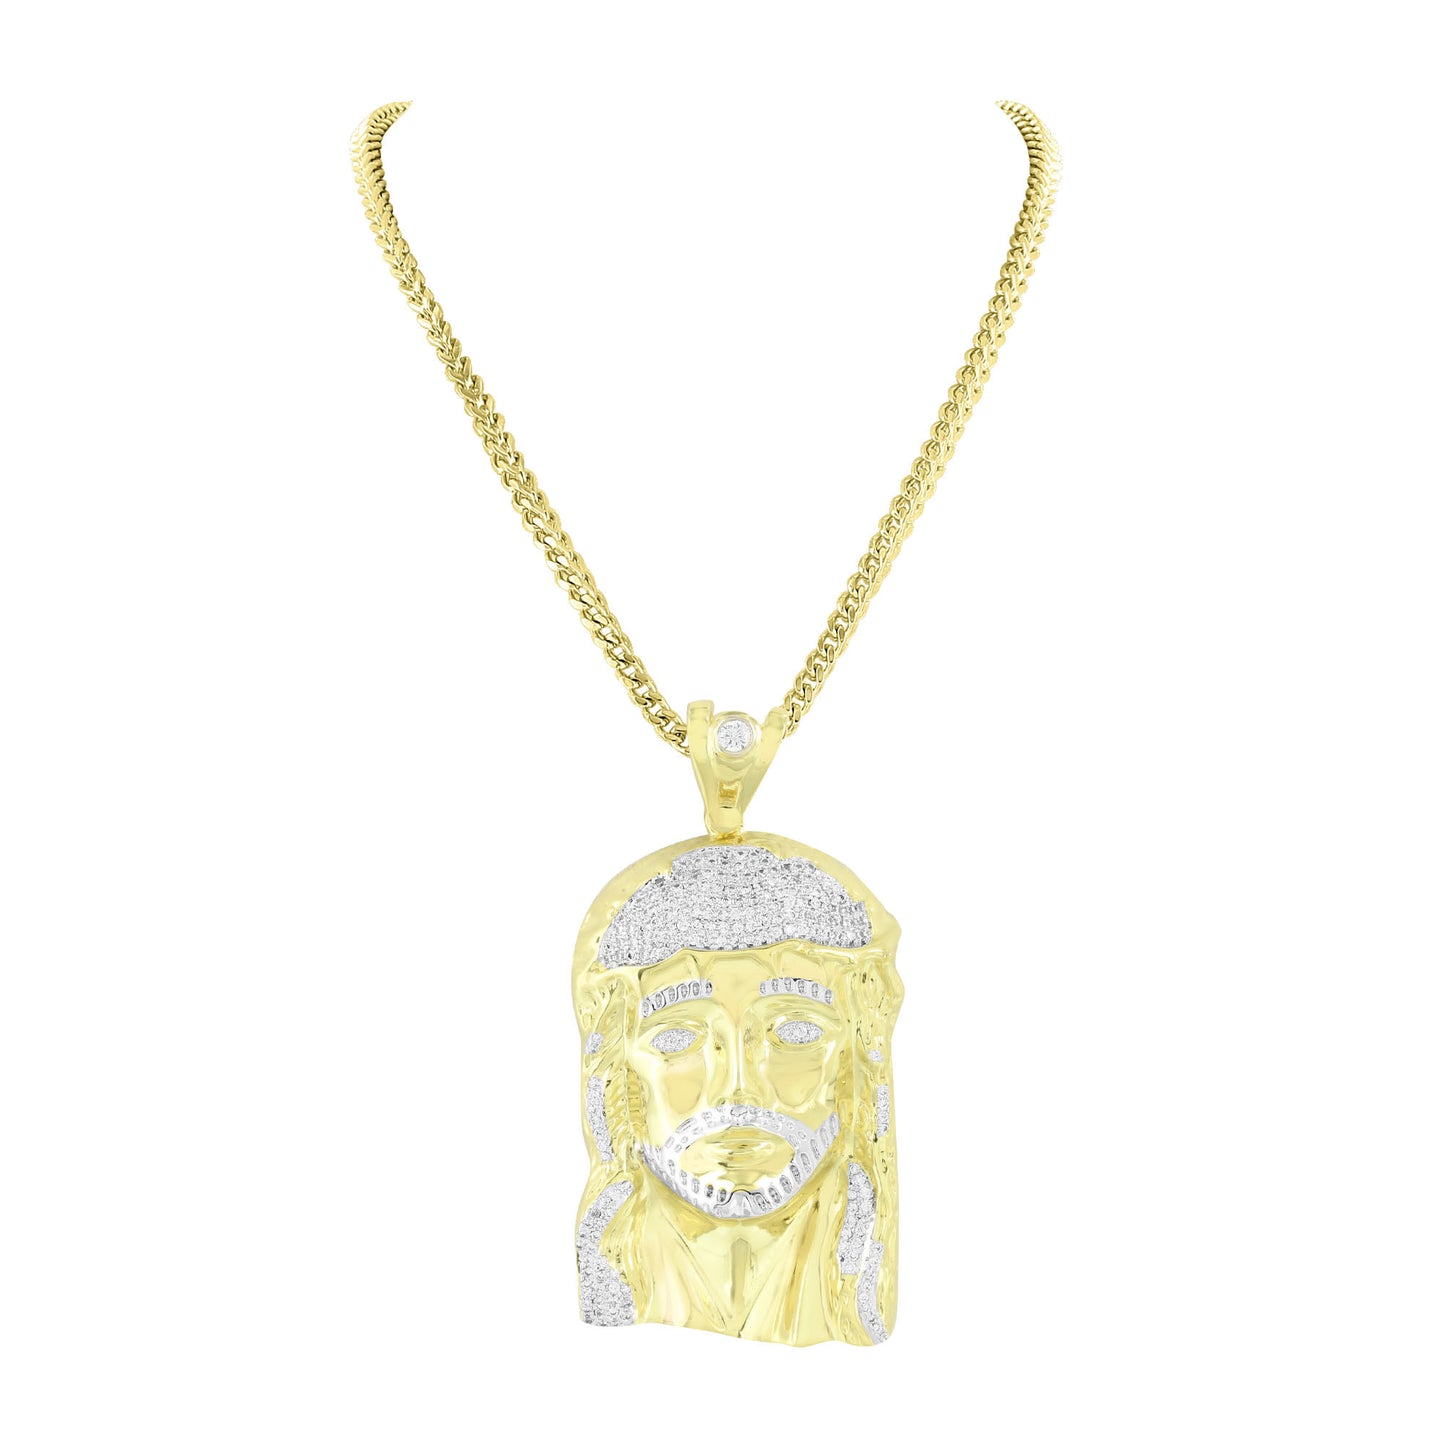 Jesus Face Design Pendant 14K Yellow Gold Finish